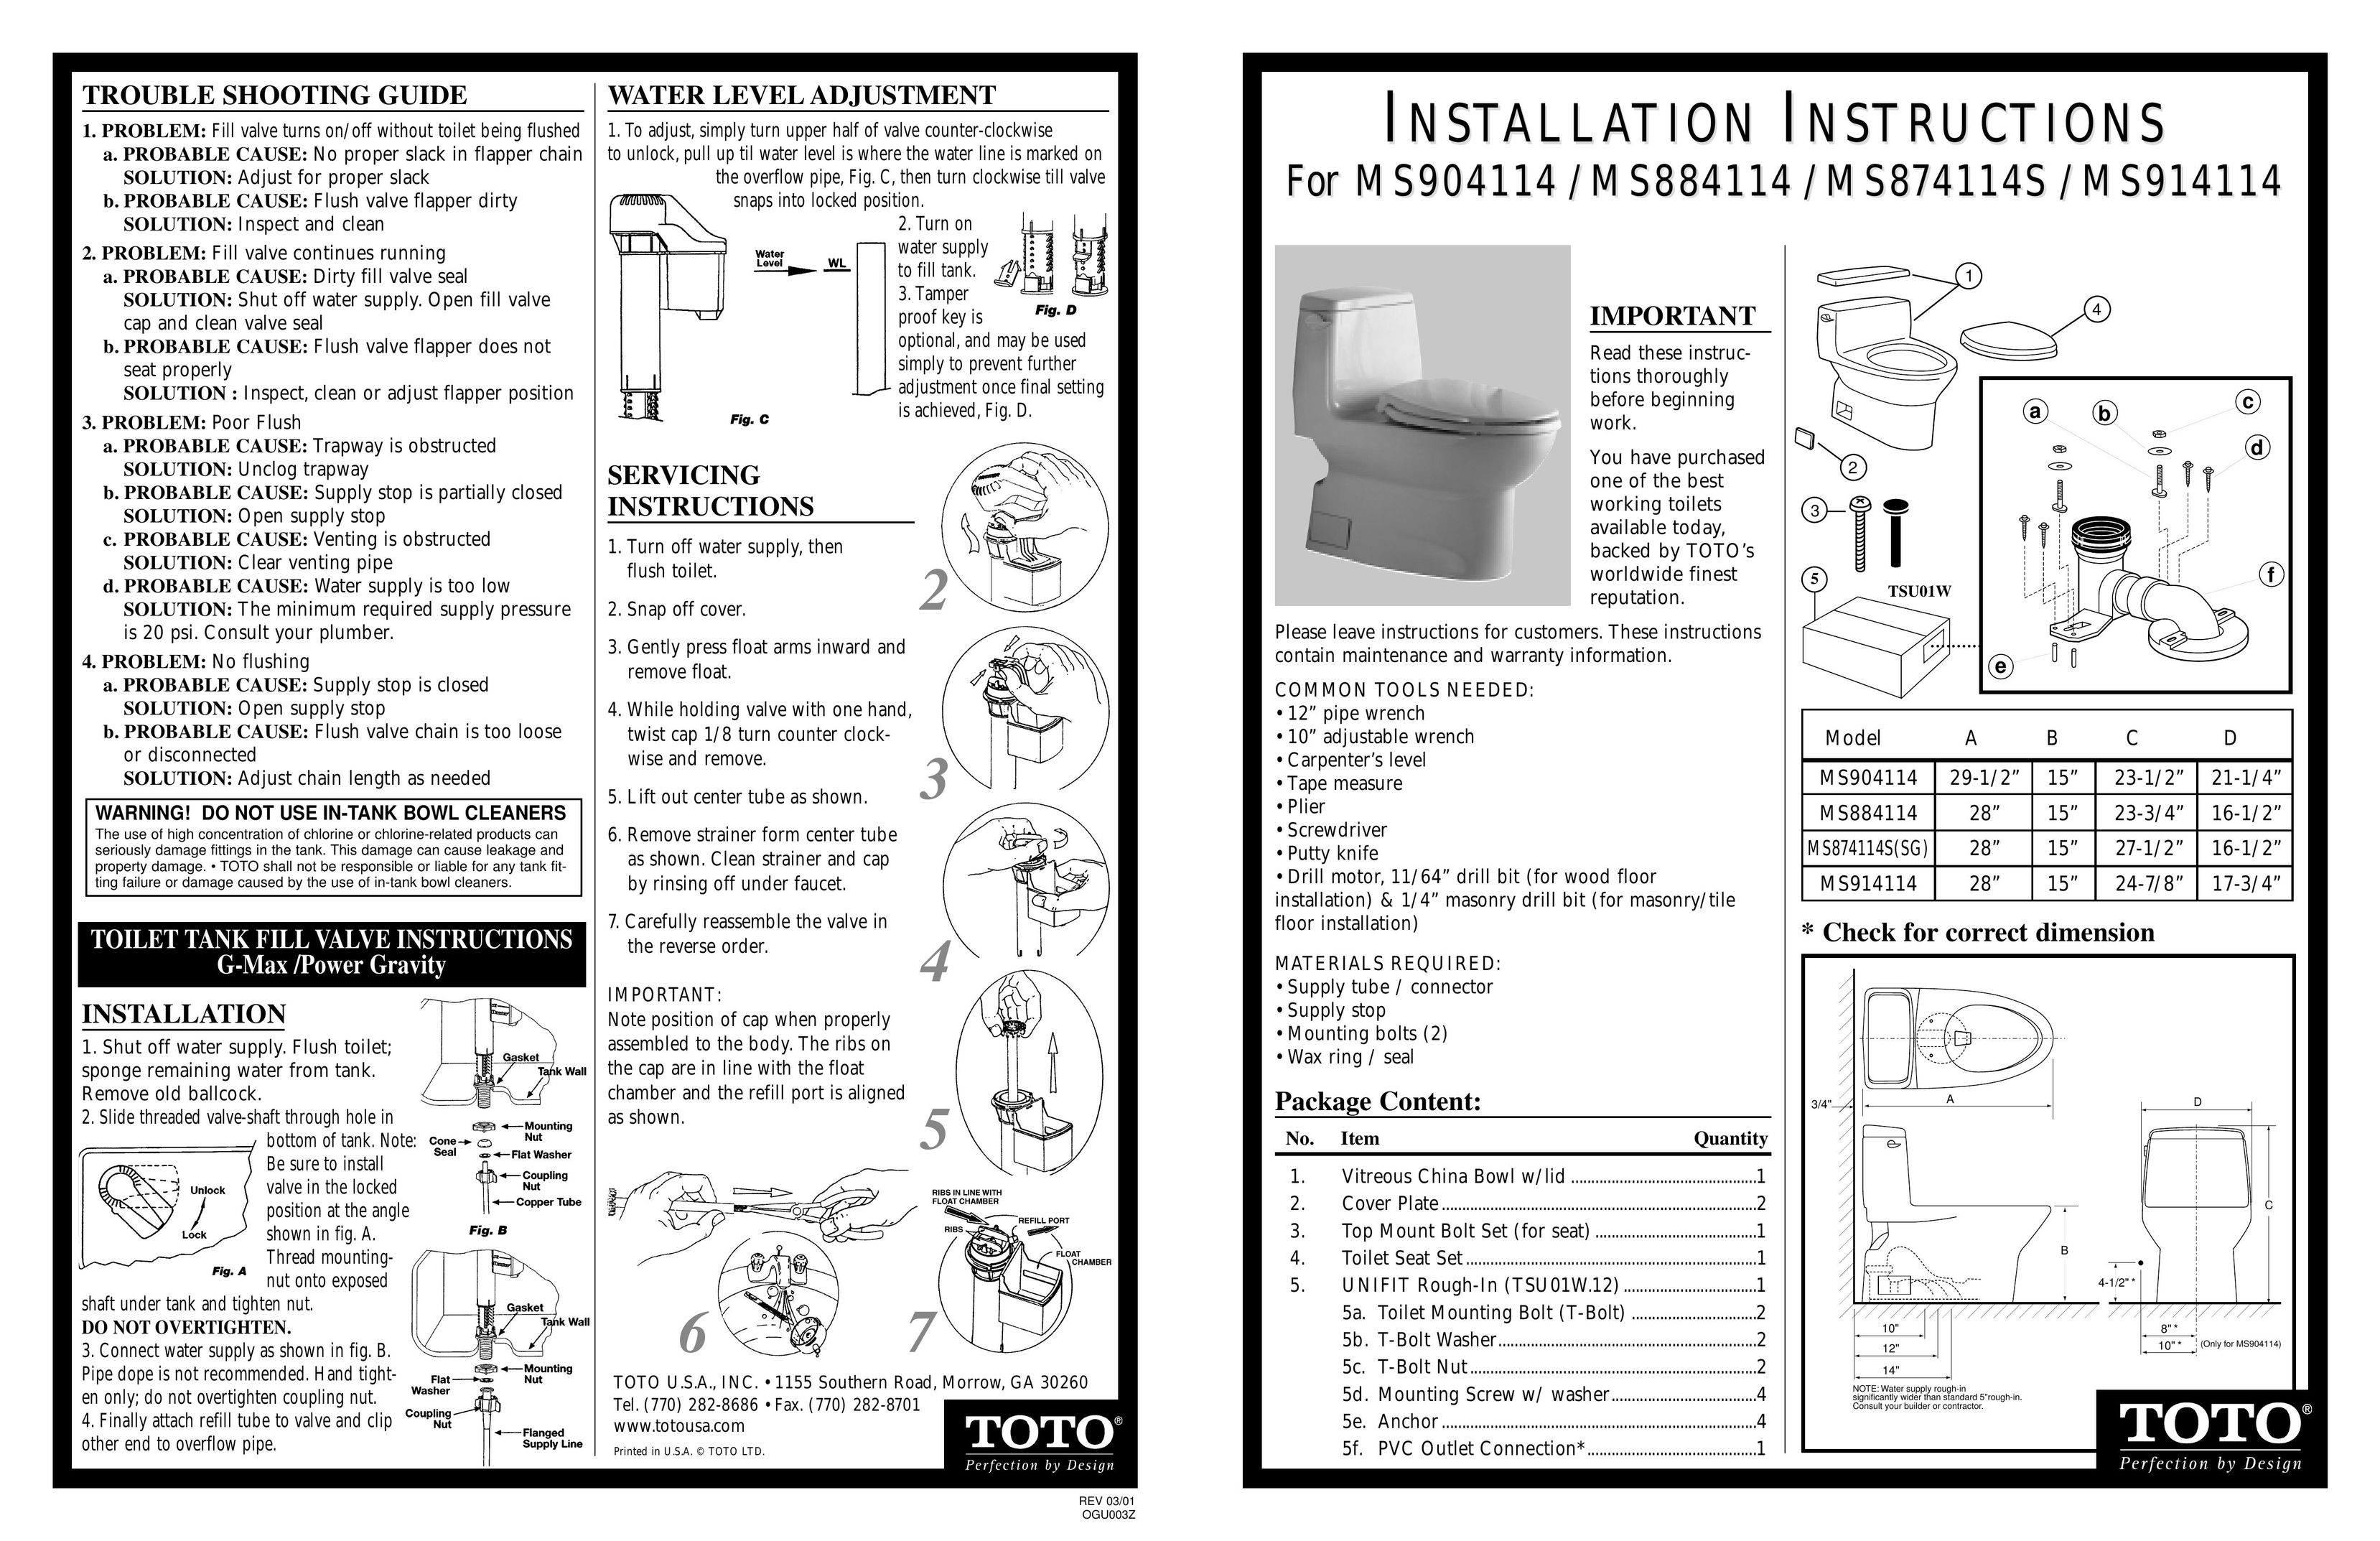 Toto MS914114 Plumbing Product User Manual